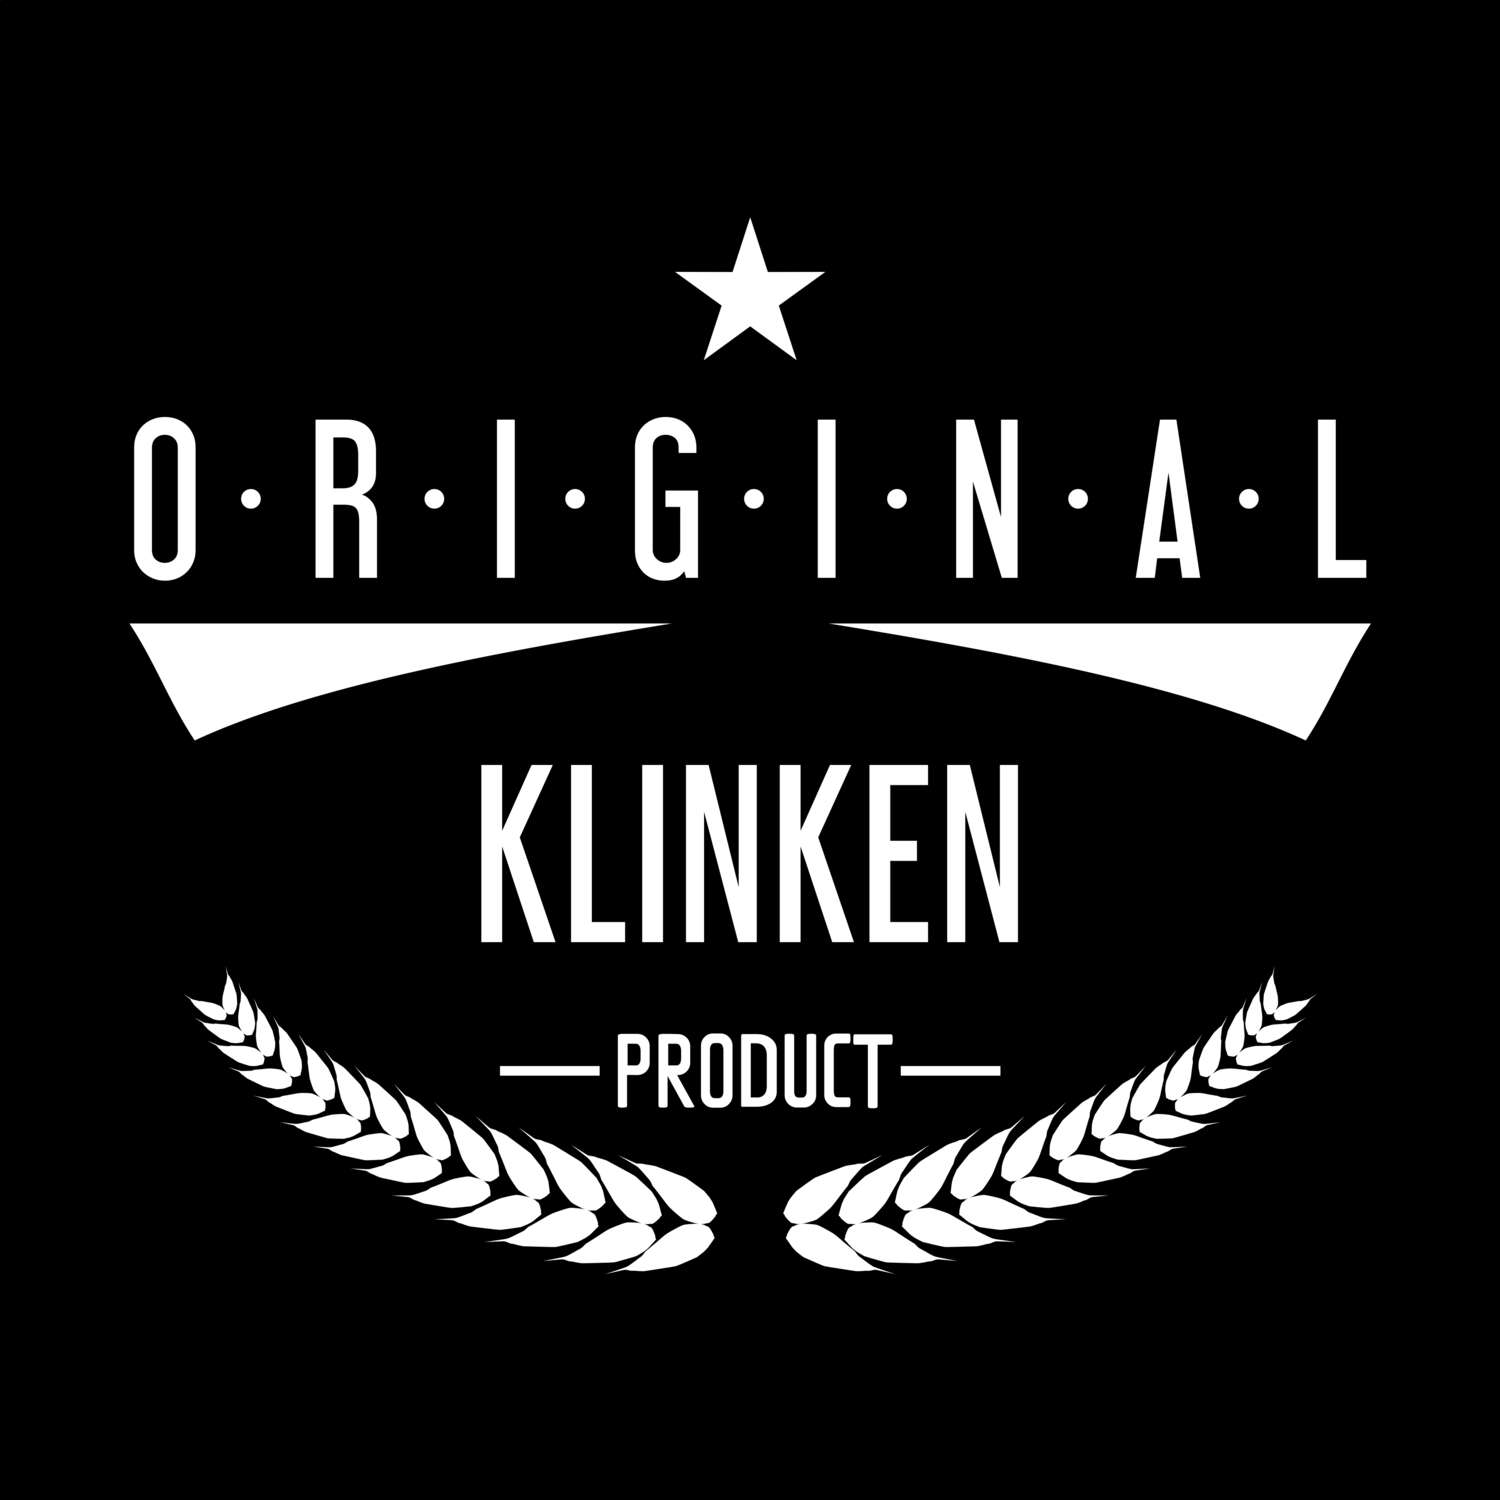 Klinken T-Shirt »Original Product«